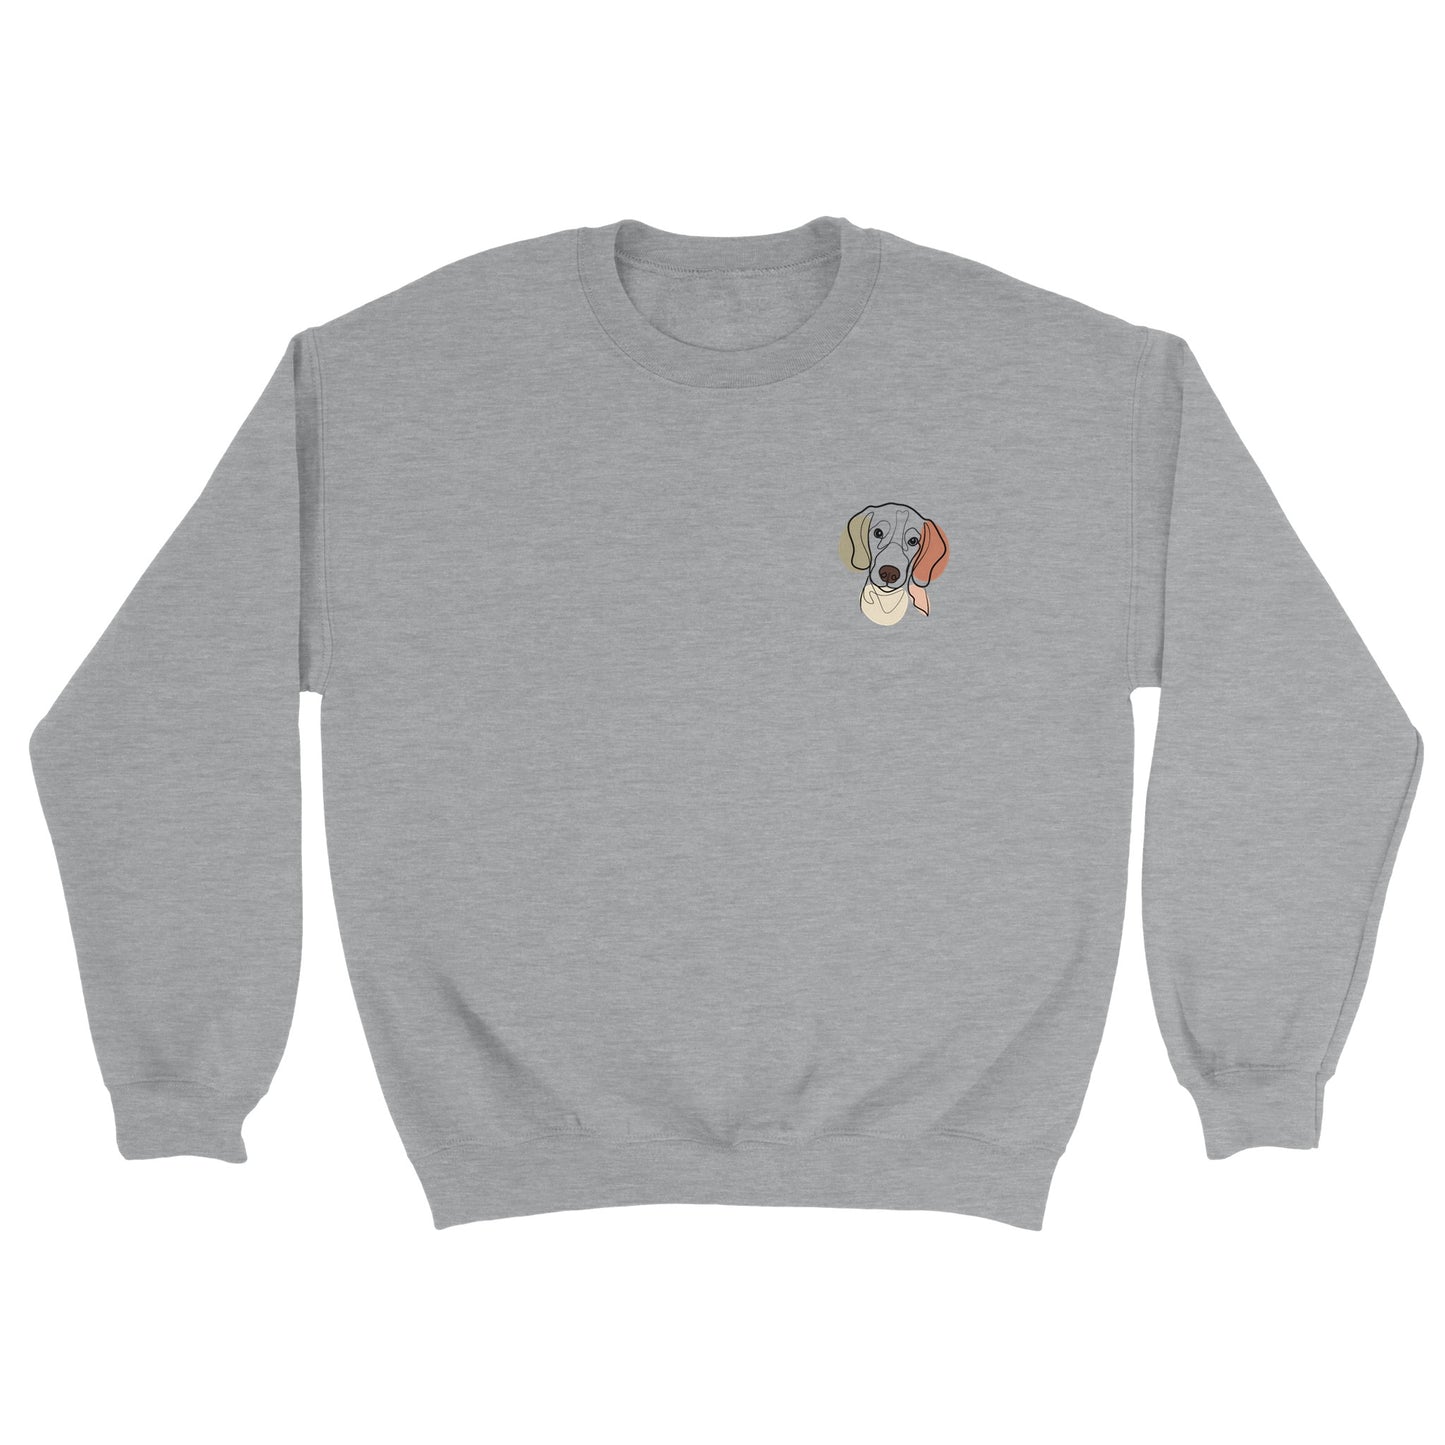 Unisex Sweater "small print"